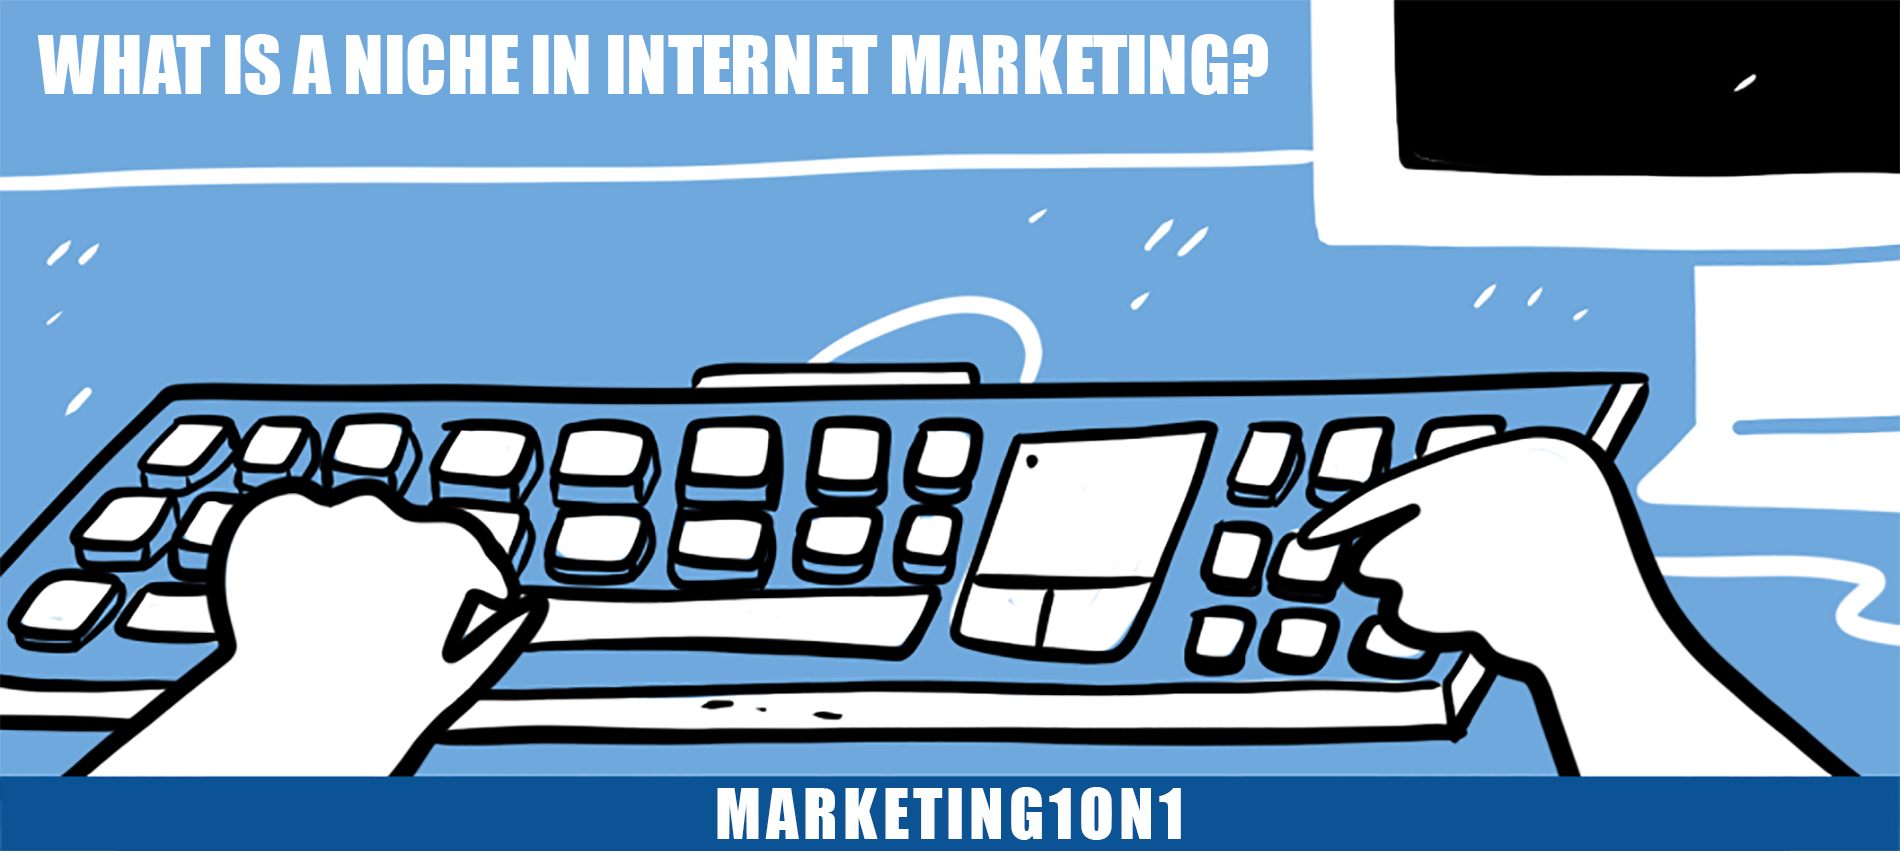 What is a niche in internet marketing?